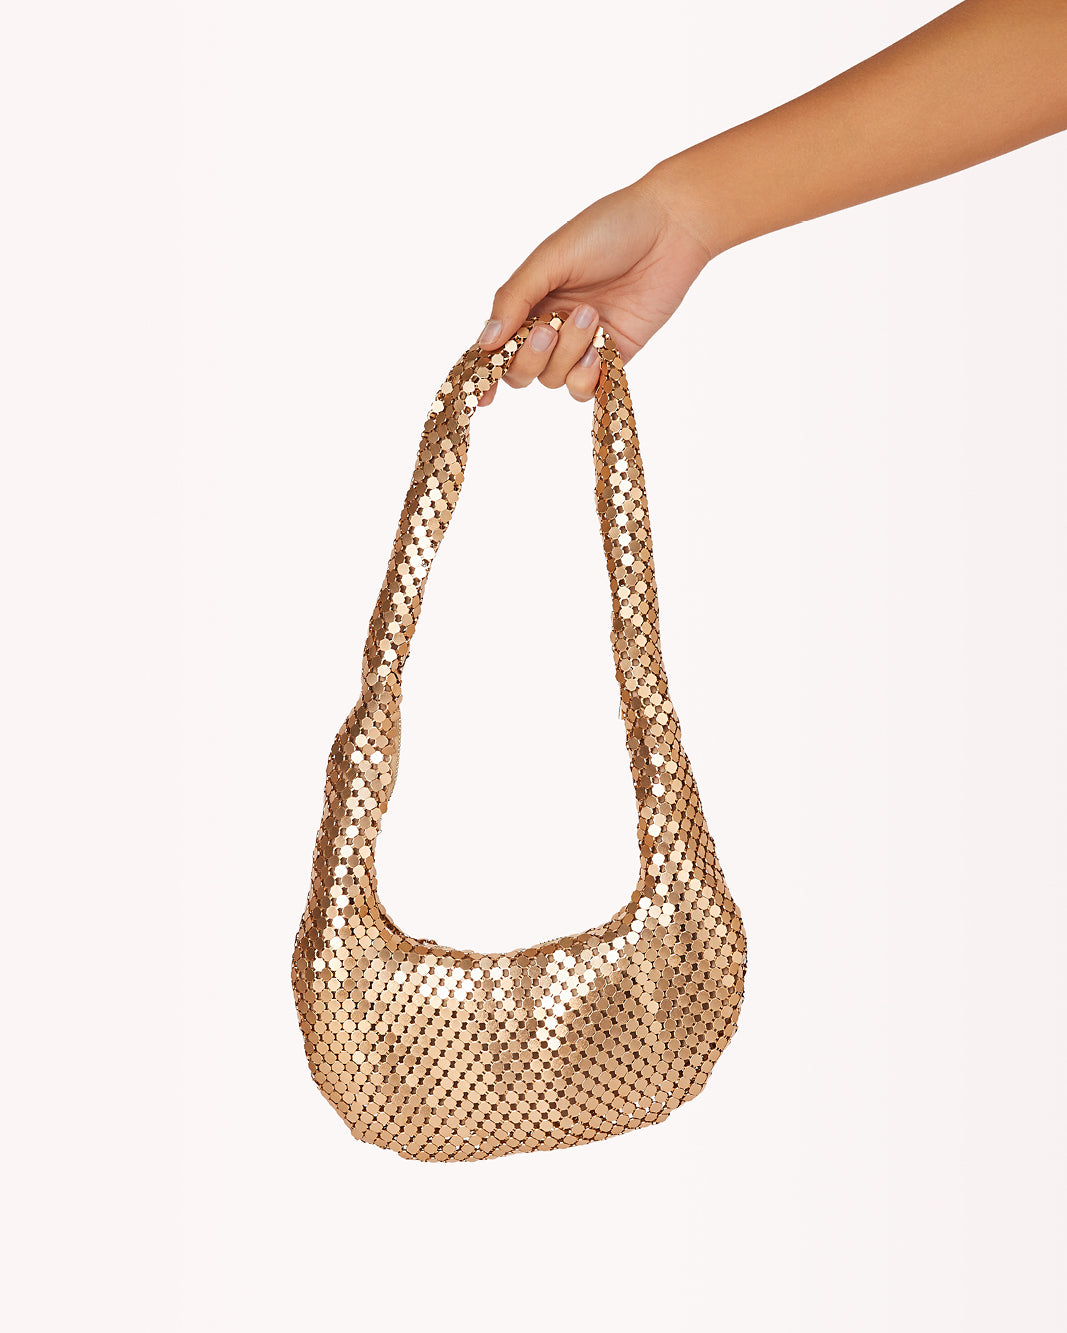 LUNA SHOULDER BAG - GOLD GLOWMESH-Handbags-Billini-O/S-BILLINI USA